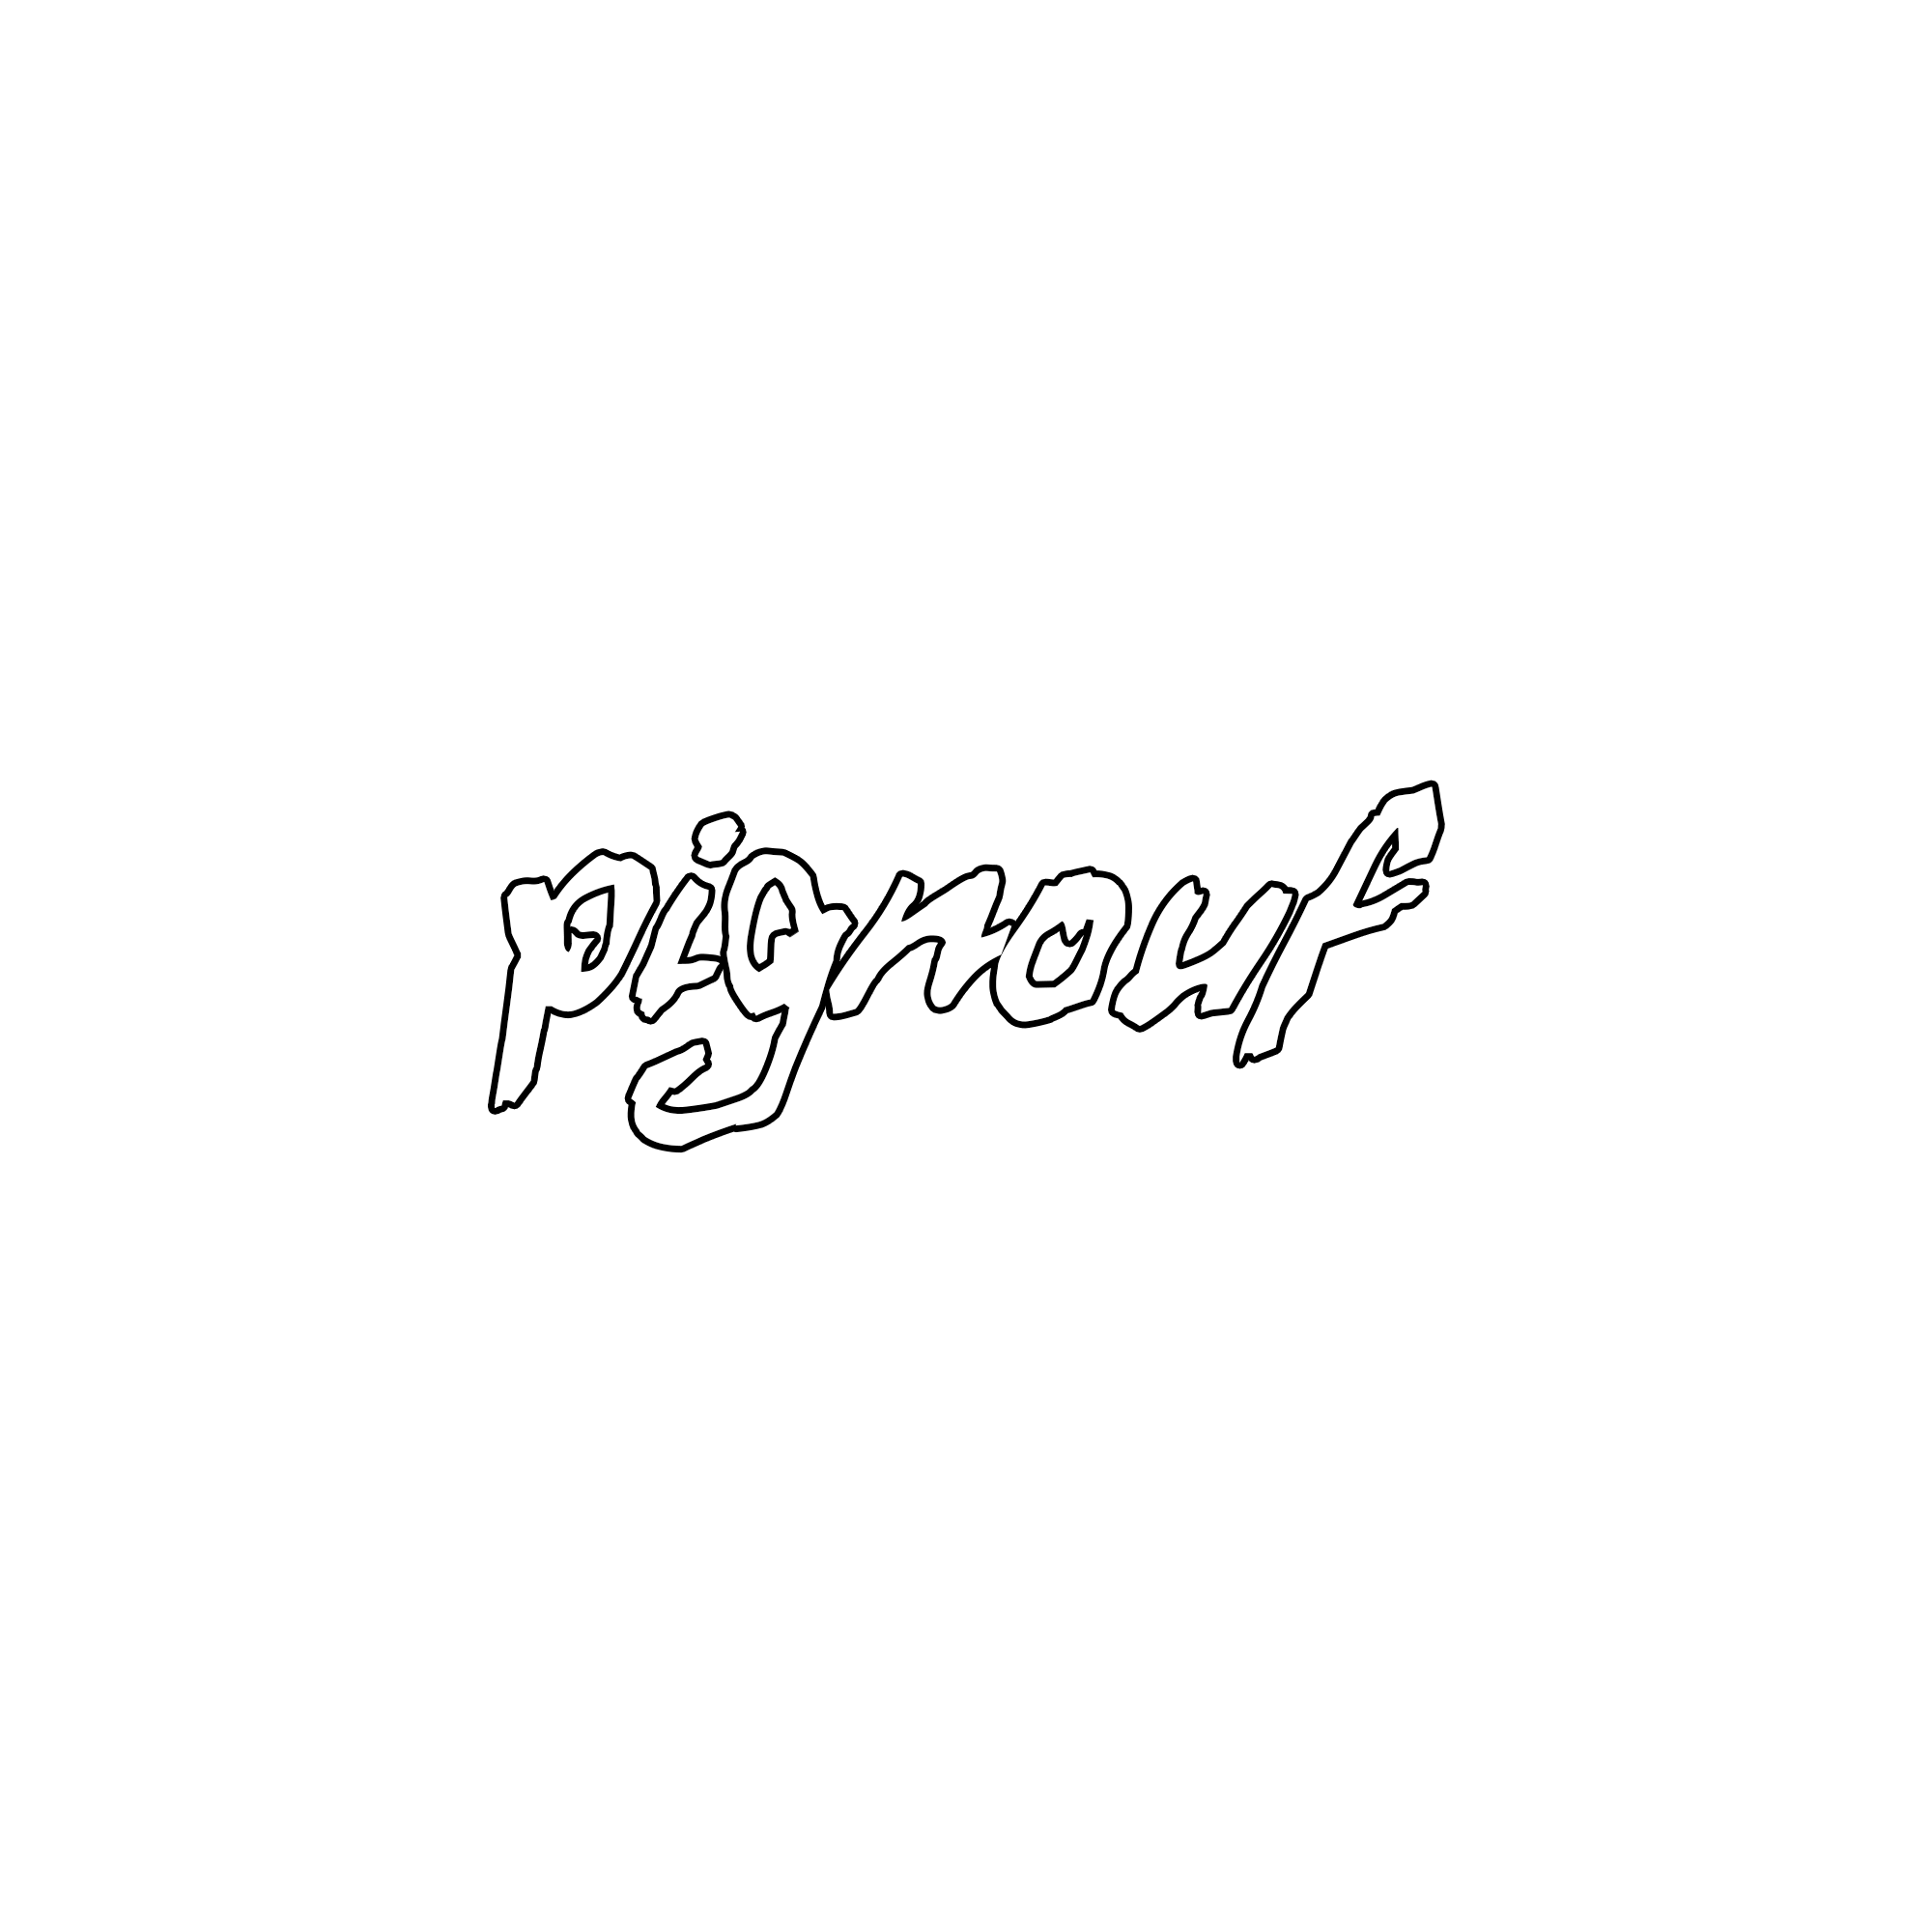 PIGNOUF team logo